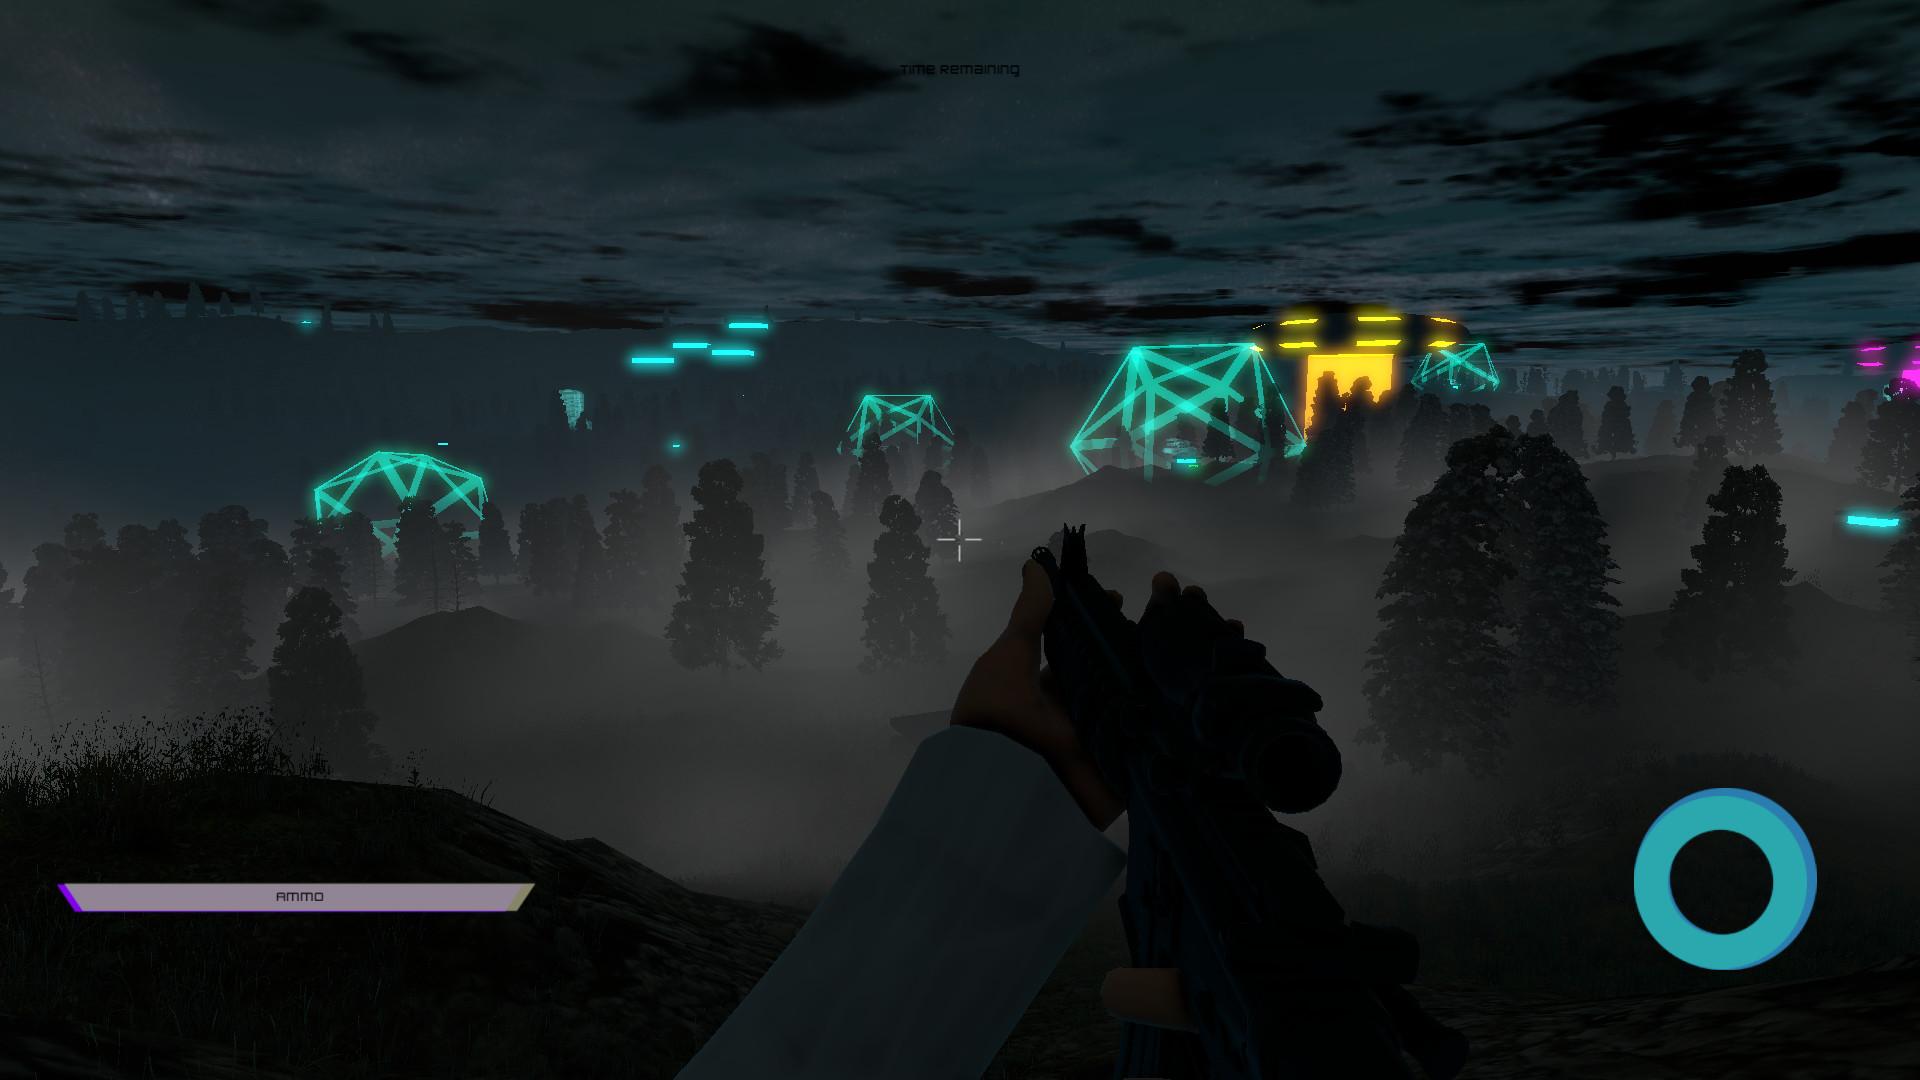 Screenshot №25 from game Endangered